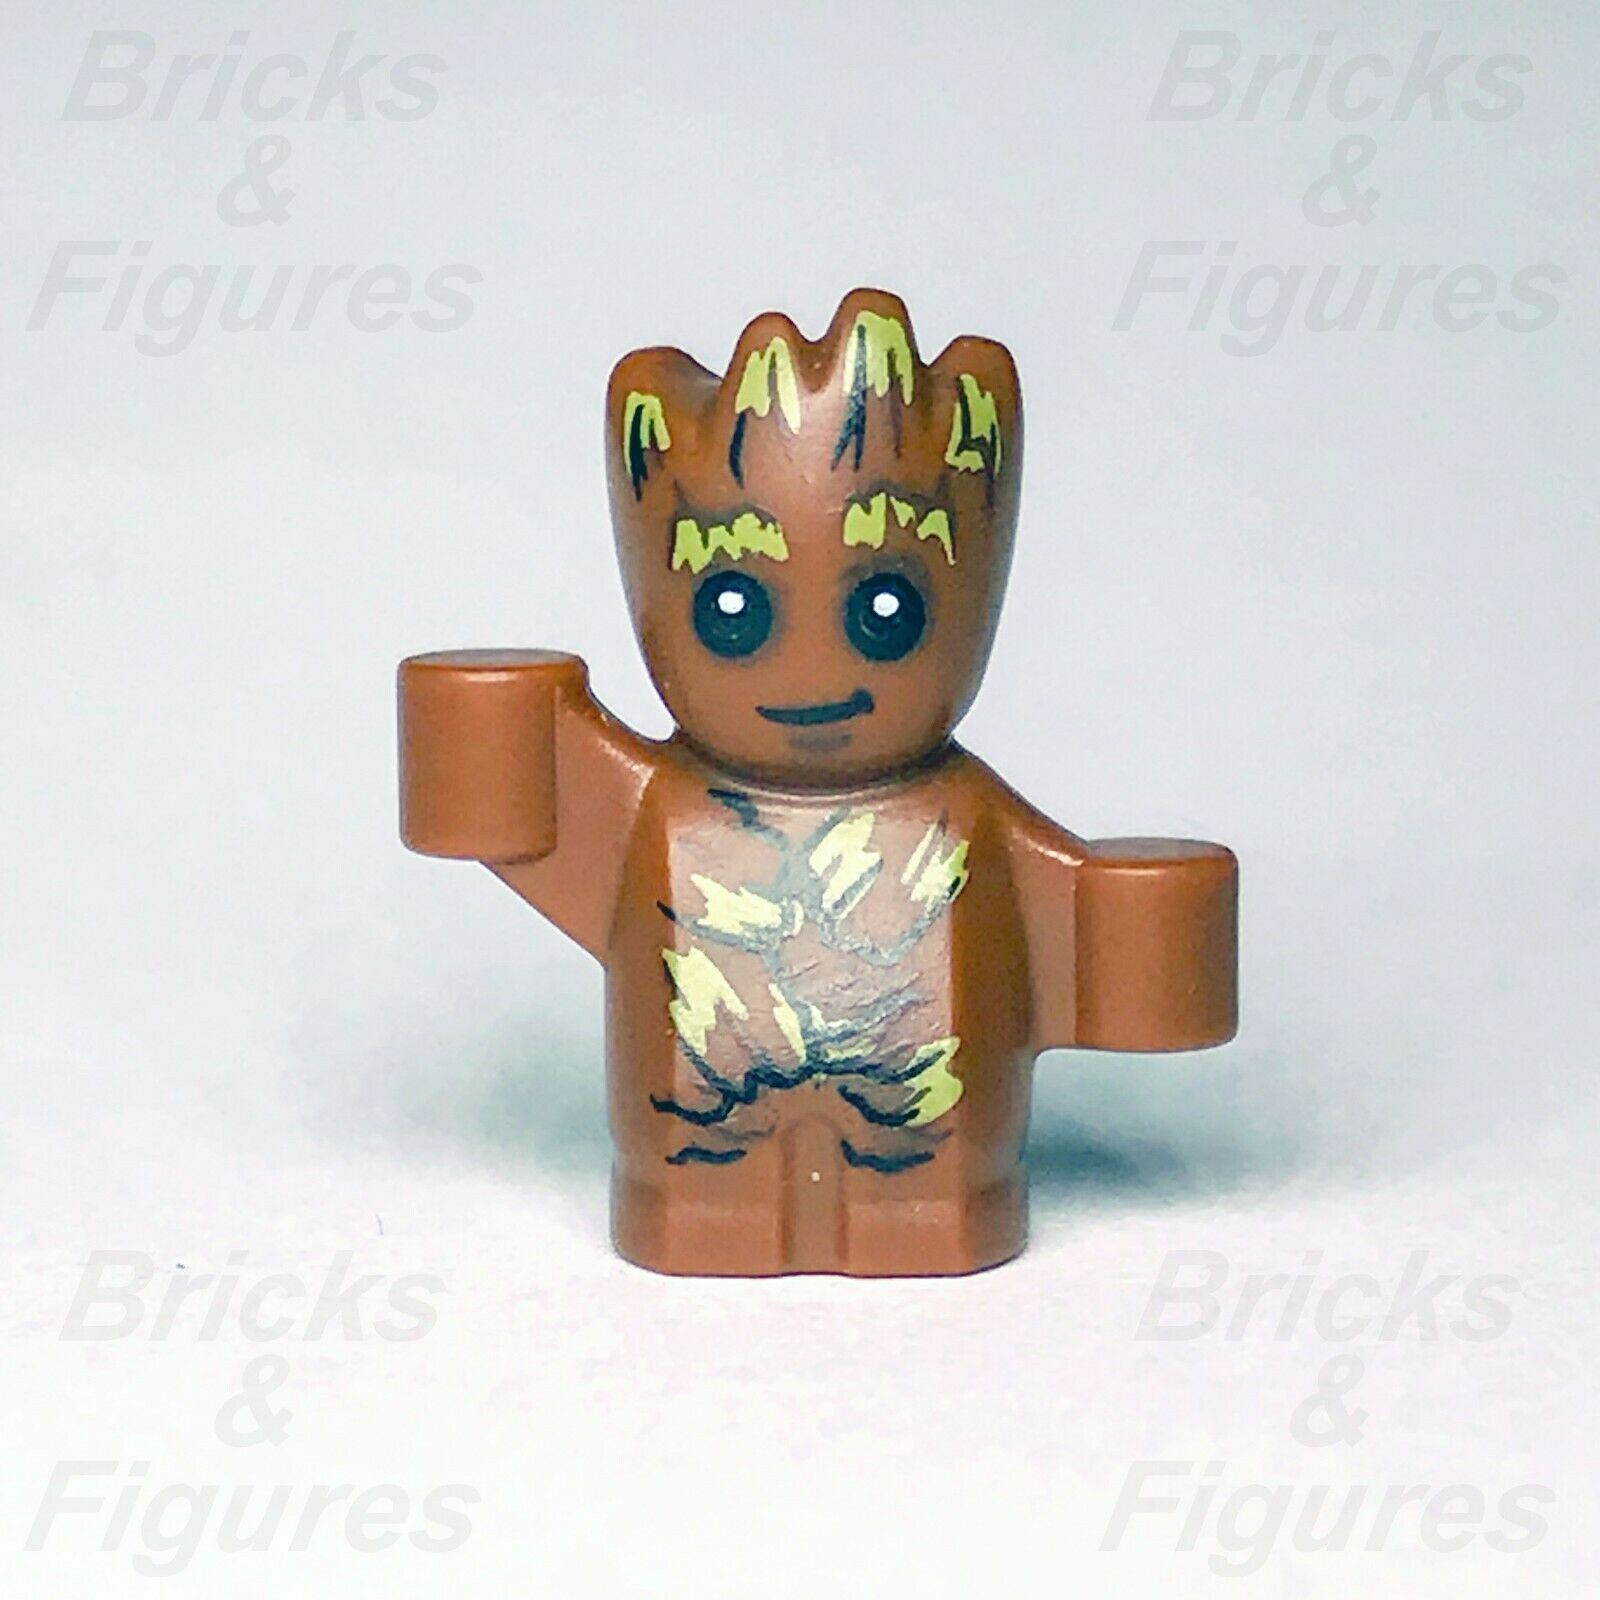 New Marvel Super Heroes LEGO Baby Groot Guardian of the Galaxy Minifigure 76081 - Bricks & Figures